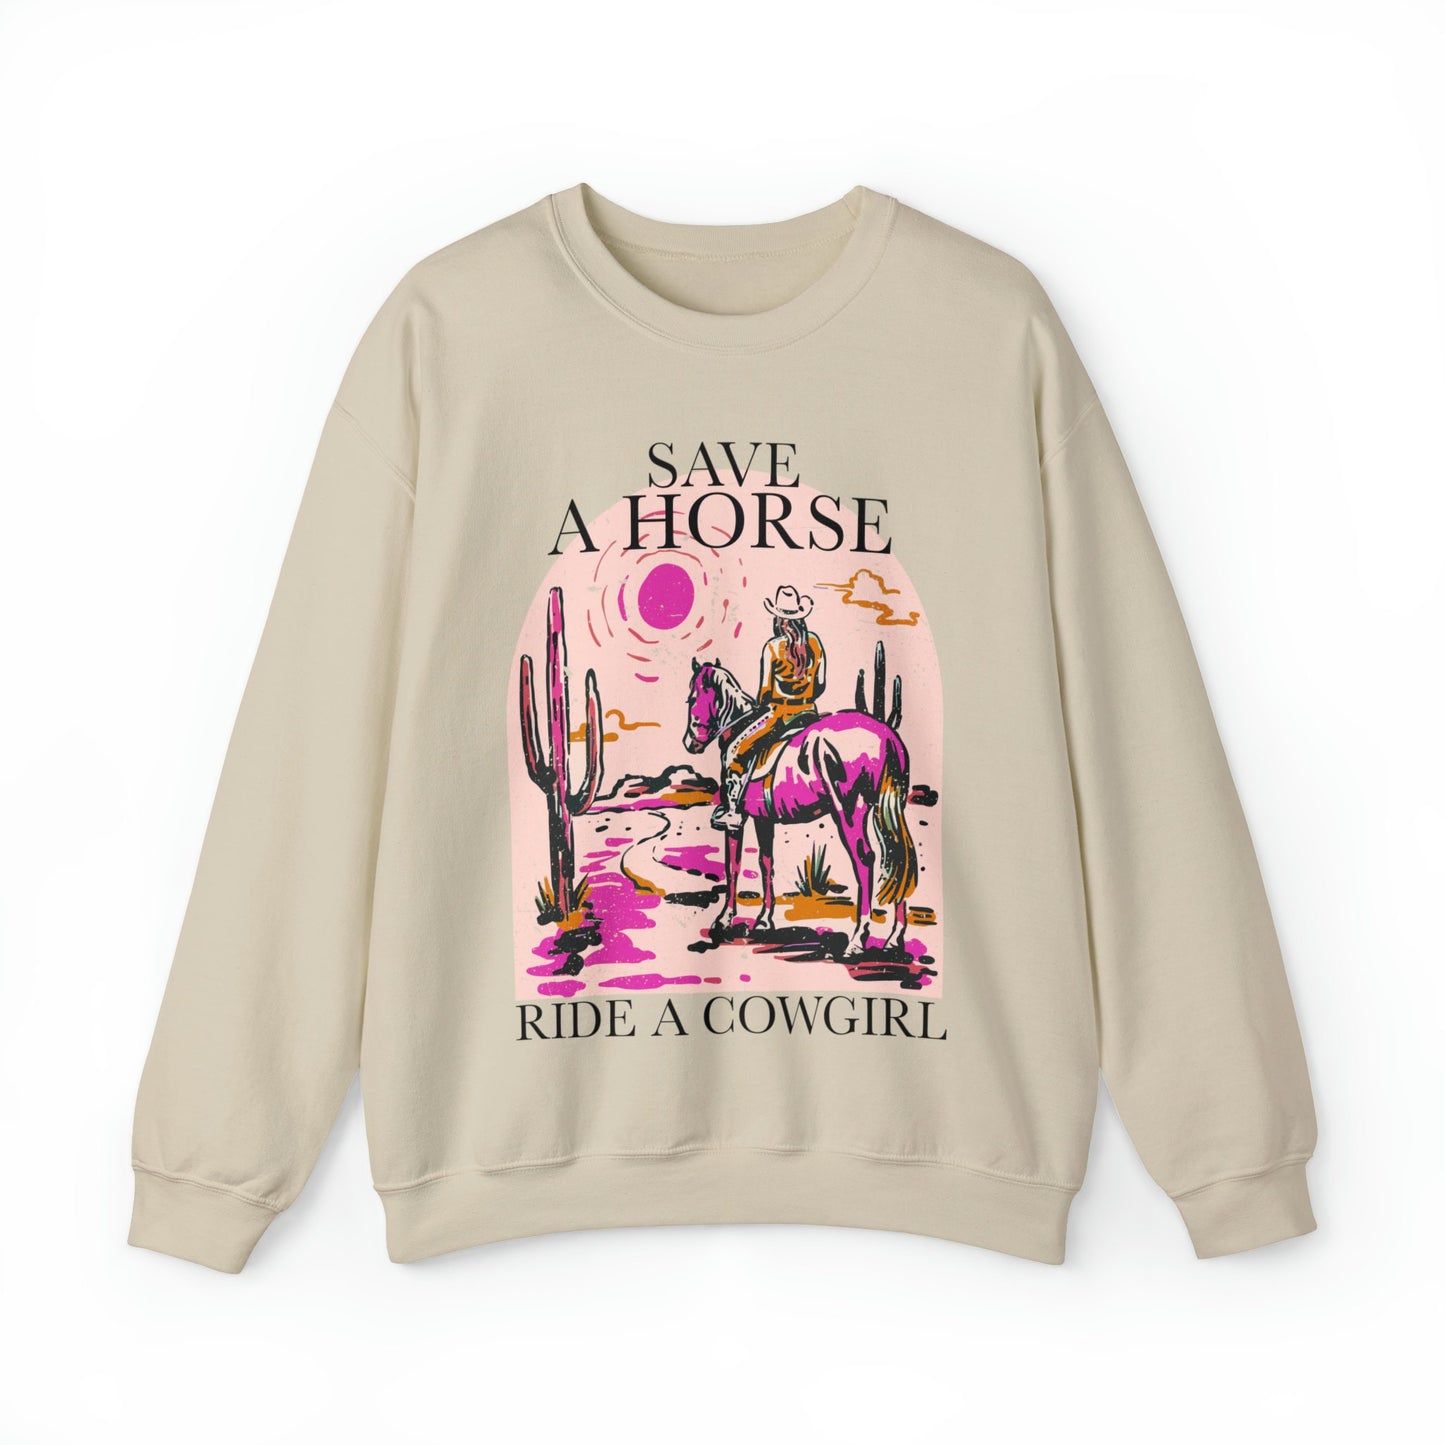 Save a horse ride a cowgirl sweatshirt